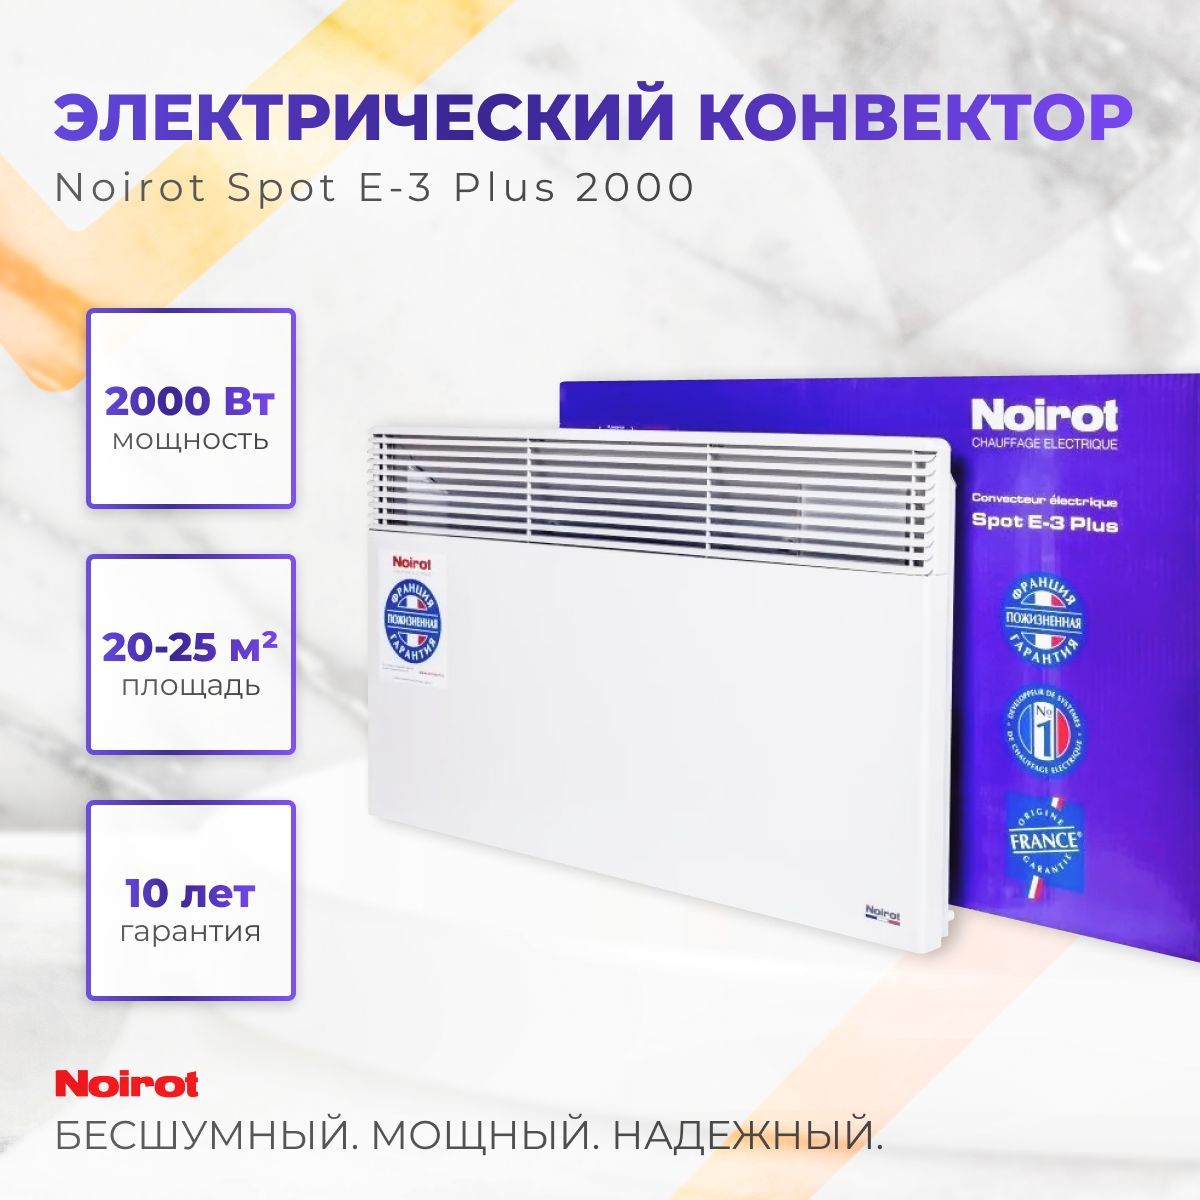 Noirot spot e-III Plus-2000. Noirot spot e 3 plus